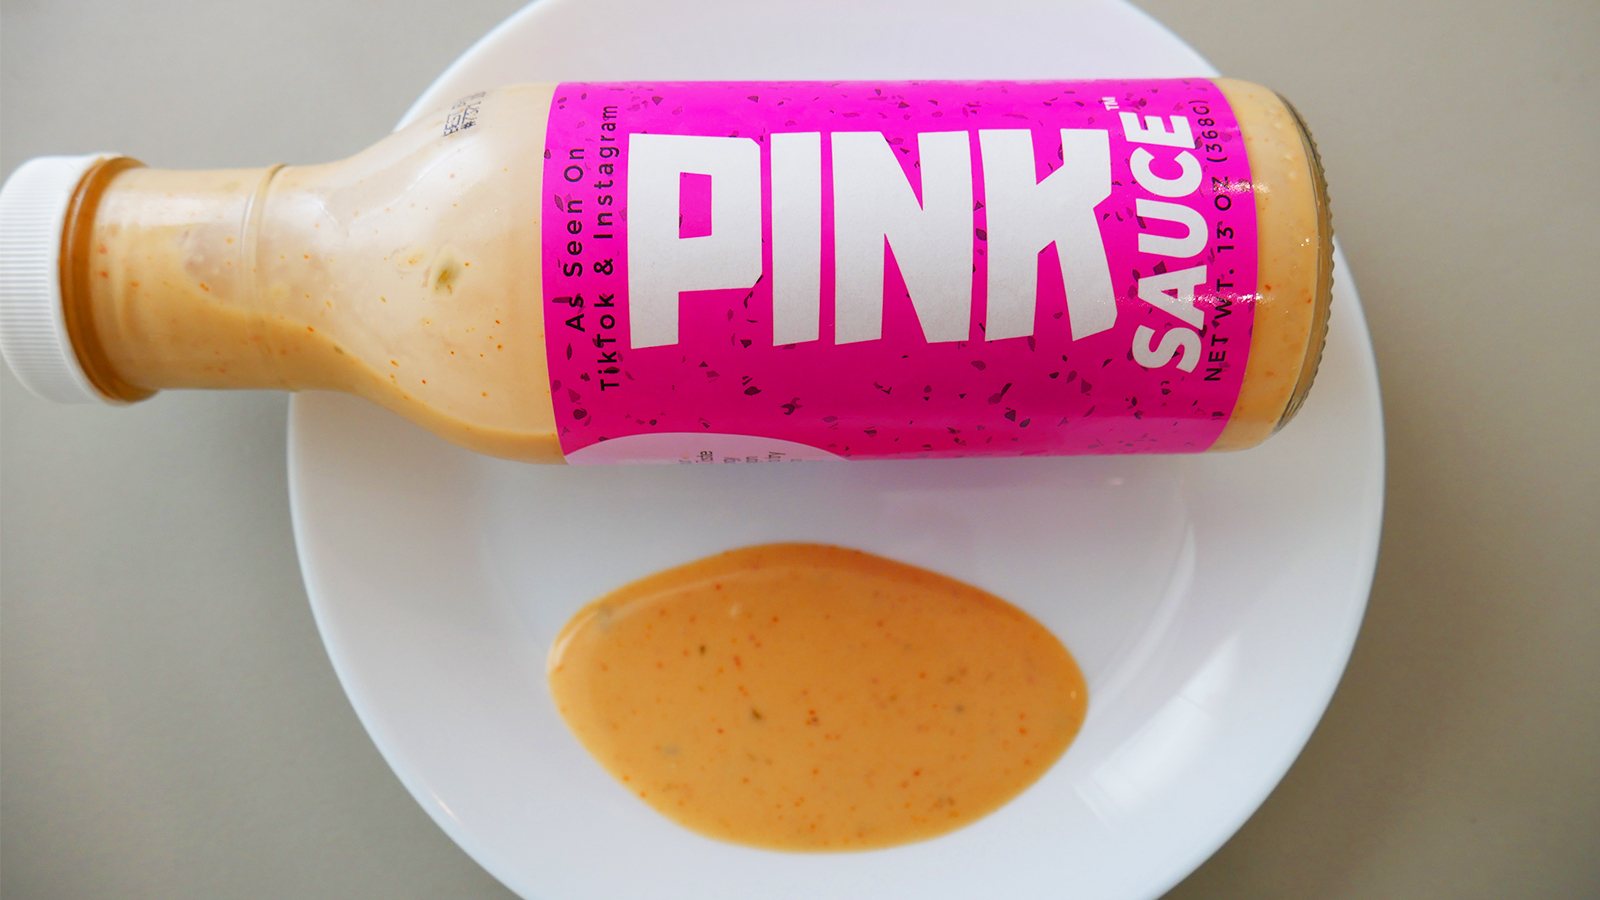 Pink Sauce review – Chef Pii’s viral TikTok sensation is a letdown